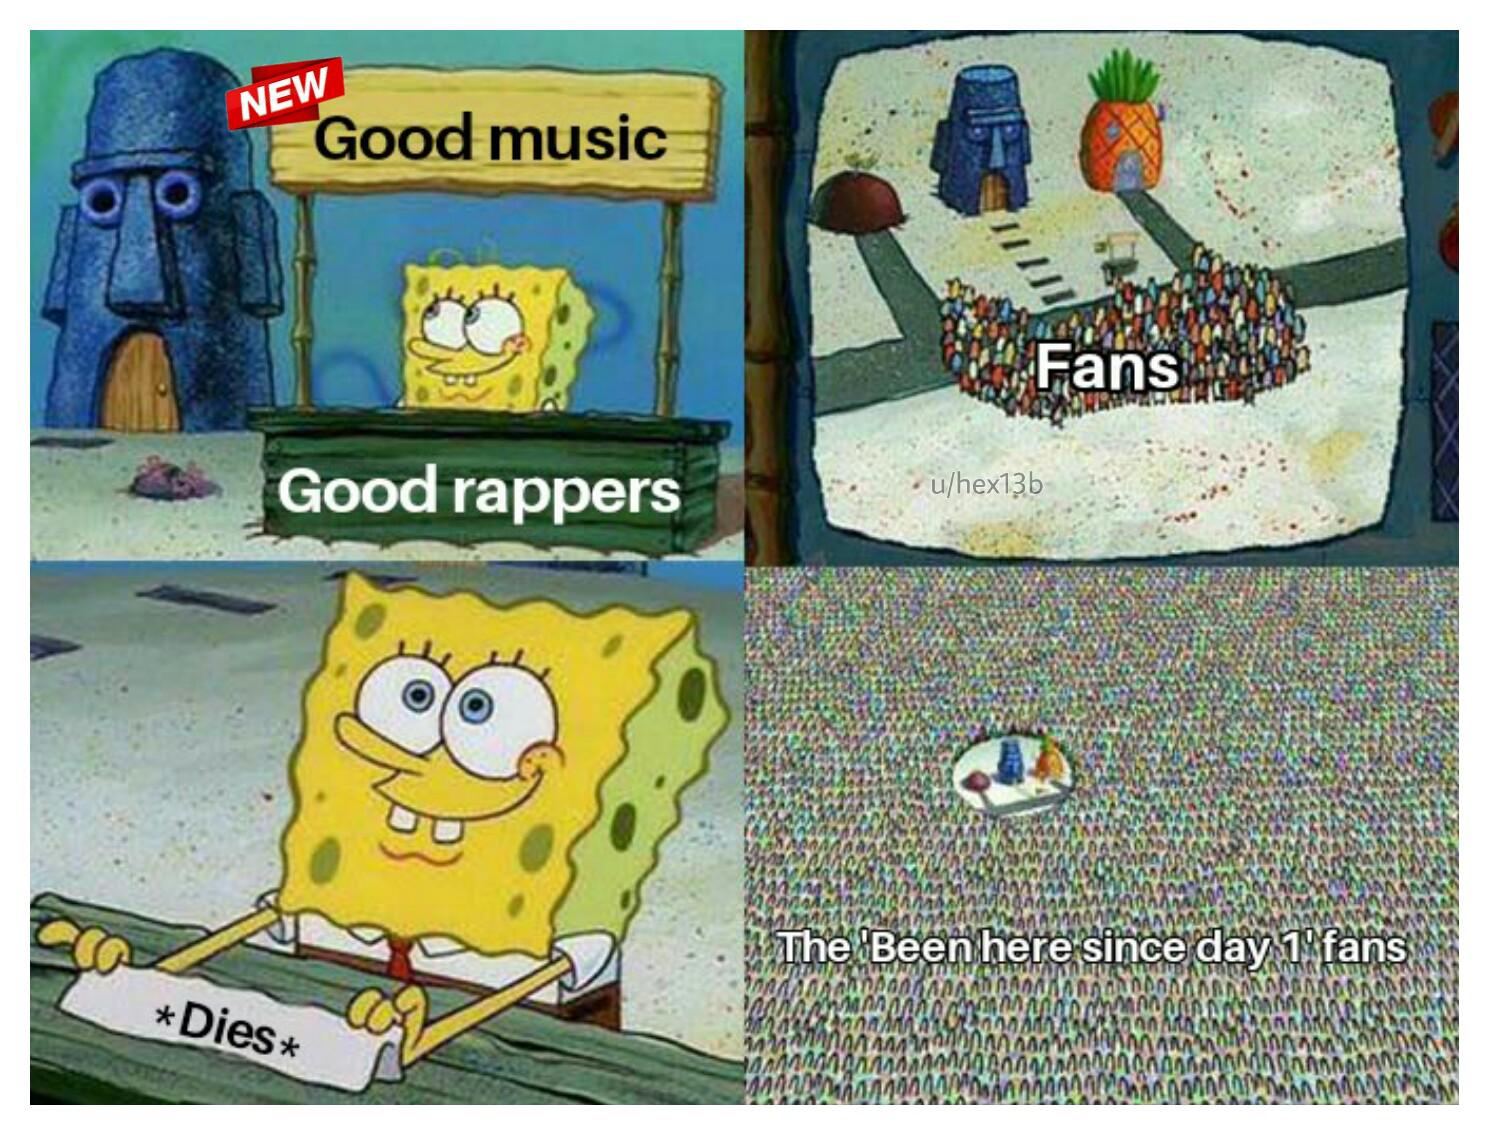 Spongebob,  Spongebob Memes Spongebob,  text: Good musi Good rappers *Dies* Fans u/hexl 3b, ihe 'Beenhere since day 1! fans r